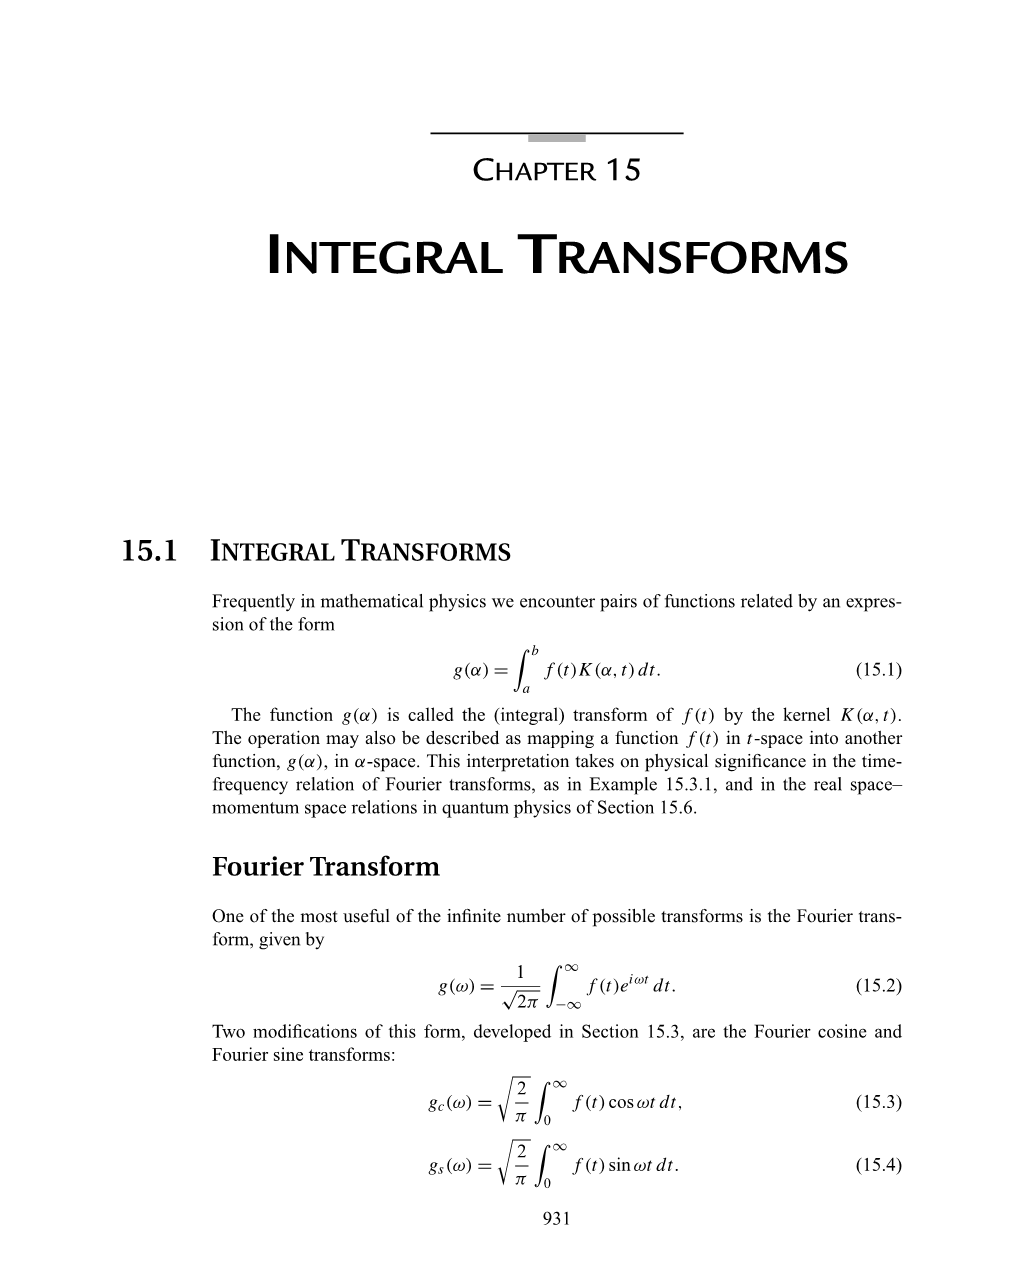 15.1 Integral Transforms